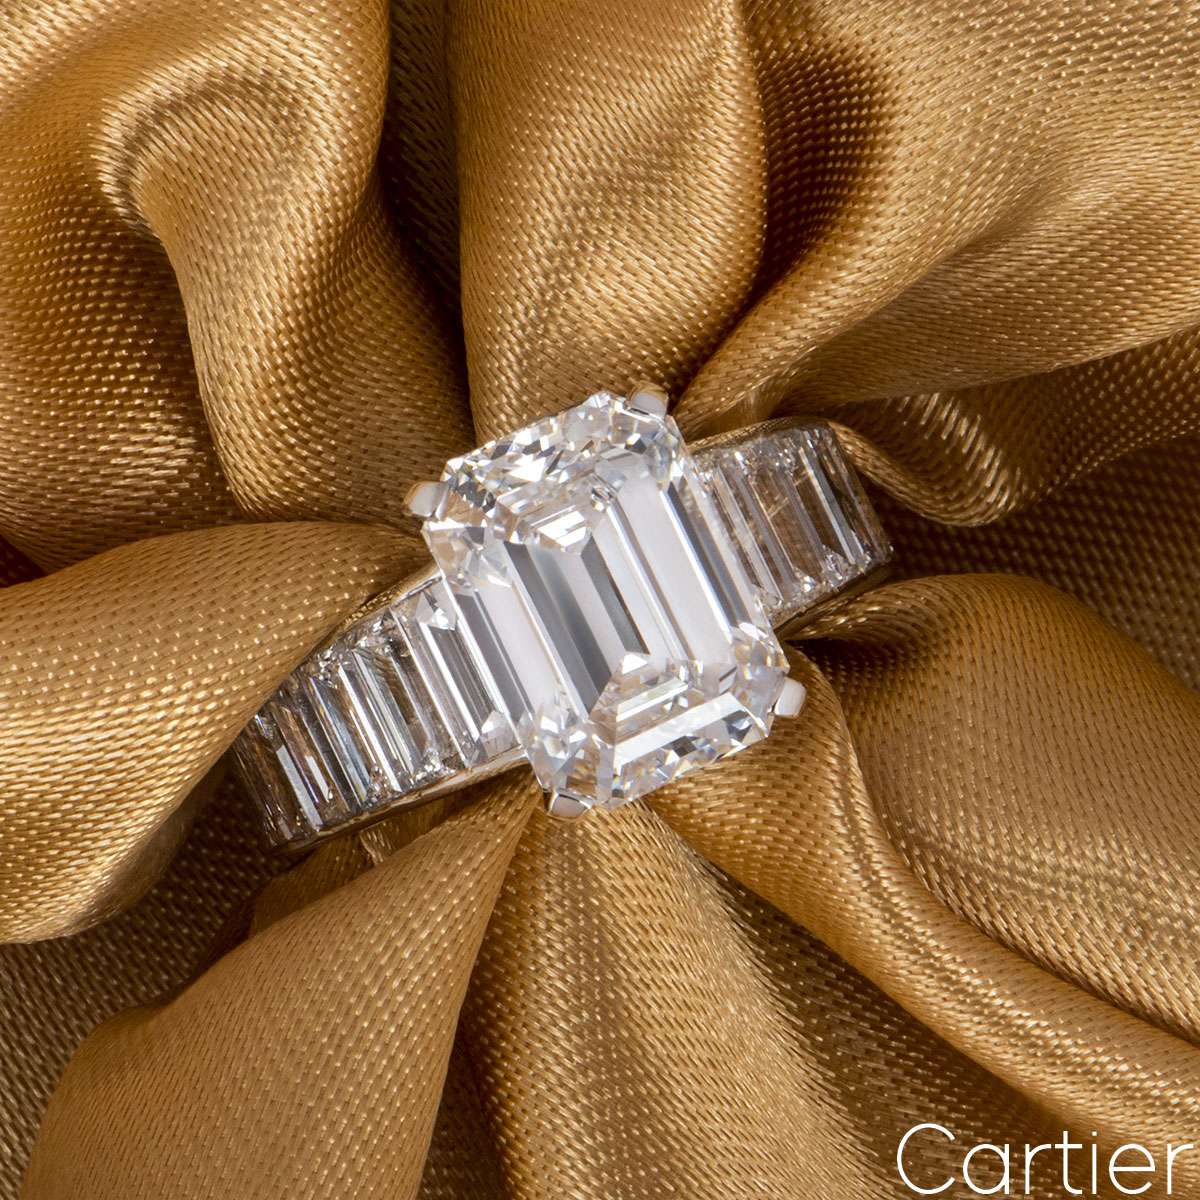 Cartier Platinum Emerald Cut Diamond Ring 4.12ct E/VVS2